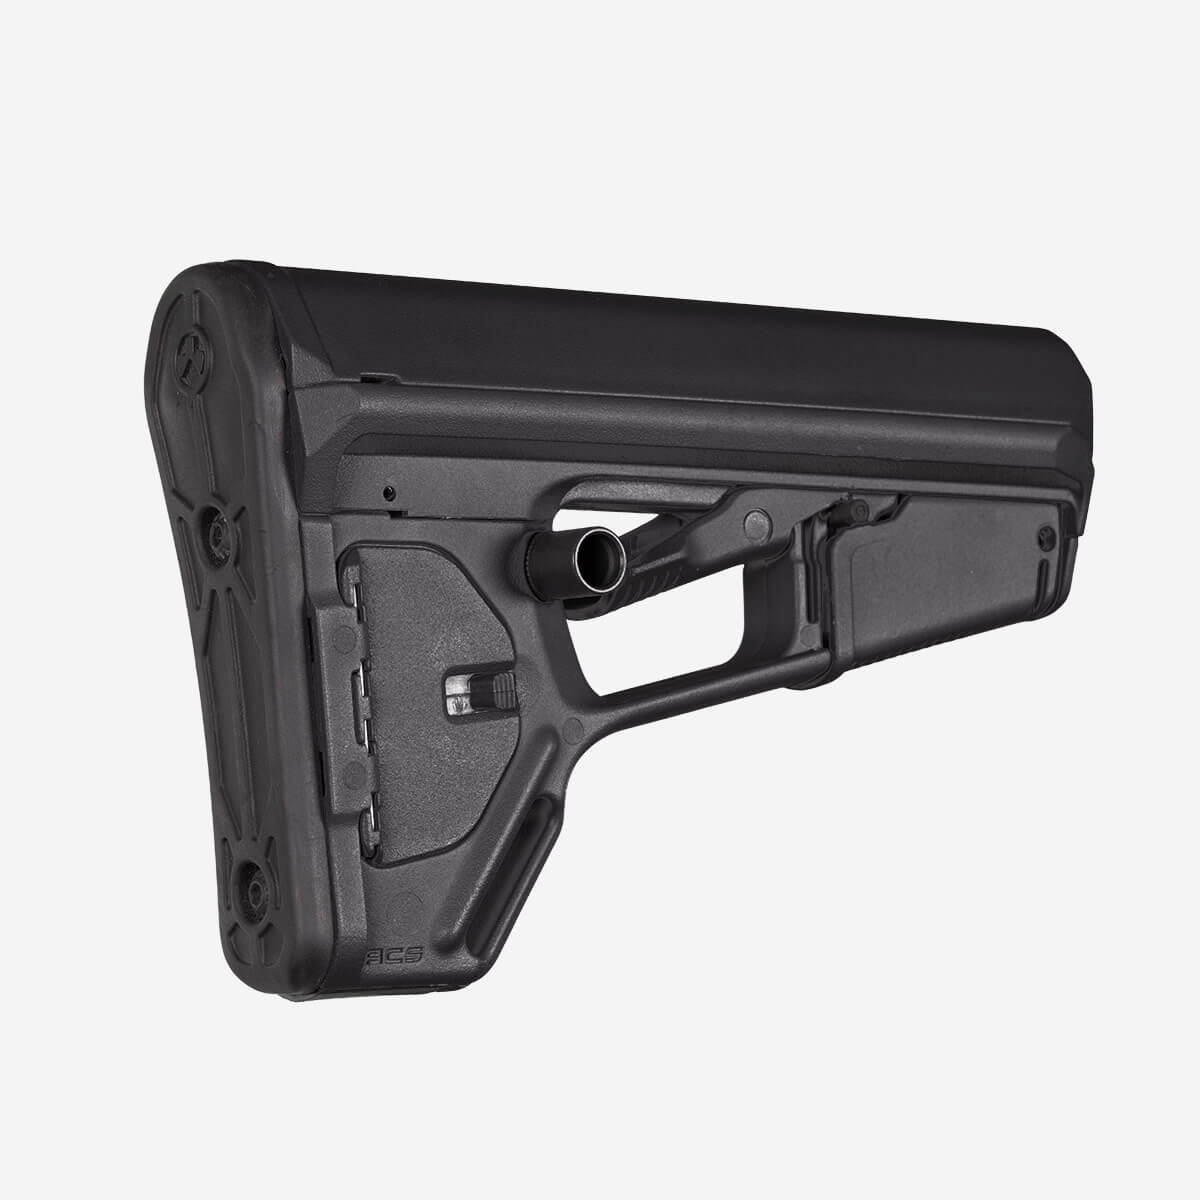 ACS-L Carbine Stock – Mil-Spec